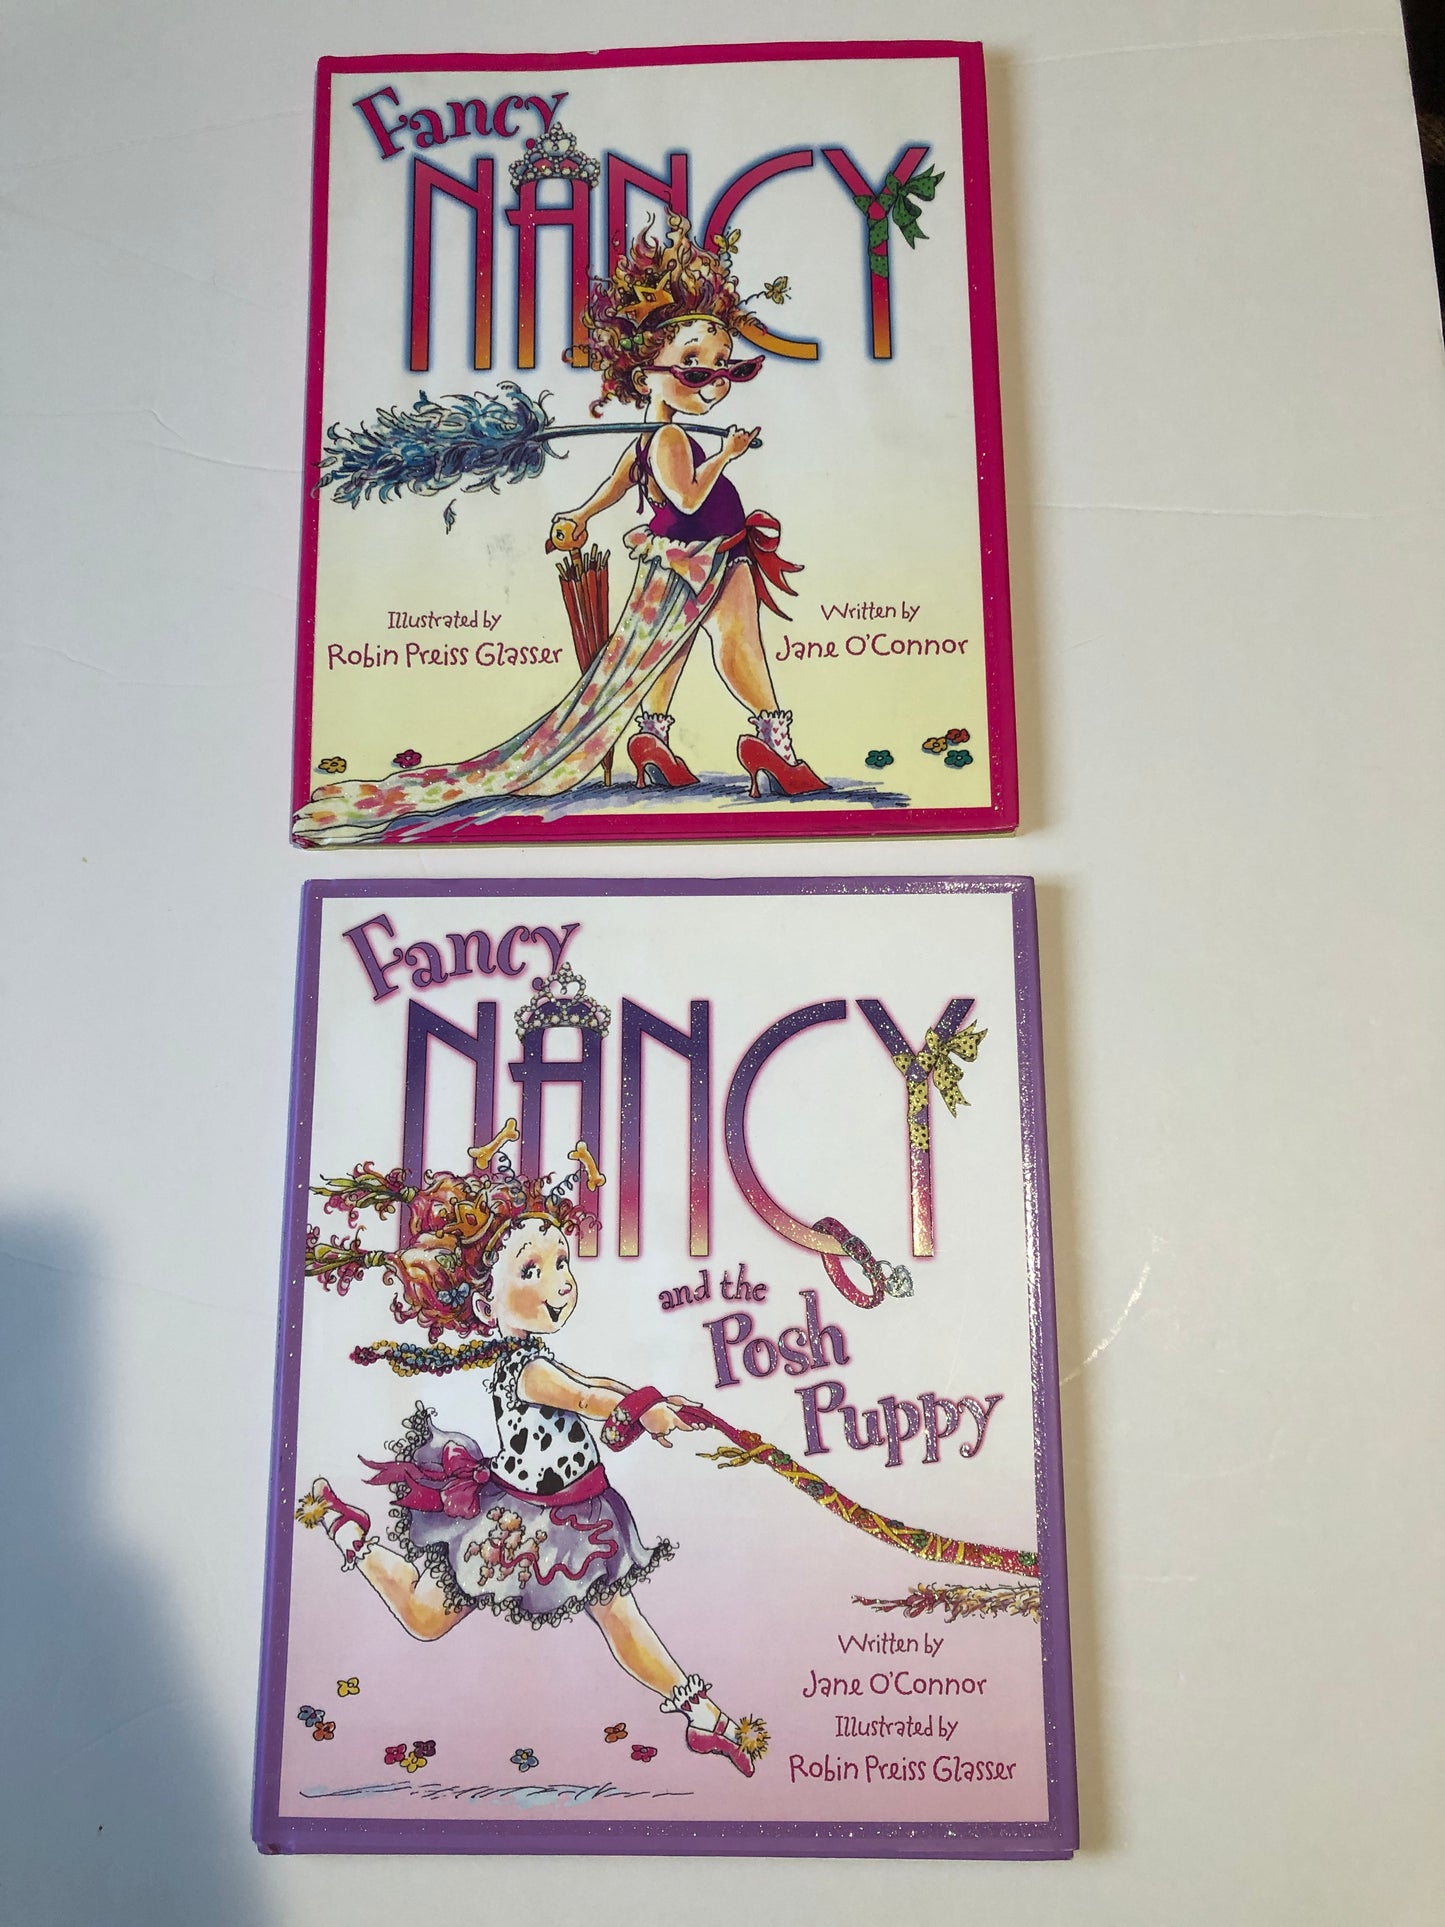 REDUCED PRICE Fancy Nancy hardcover books